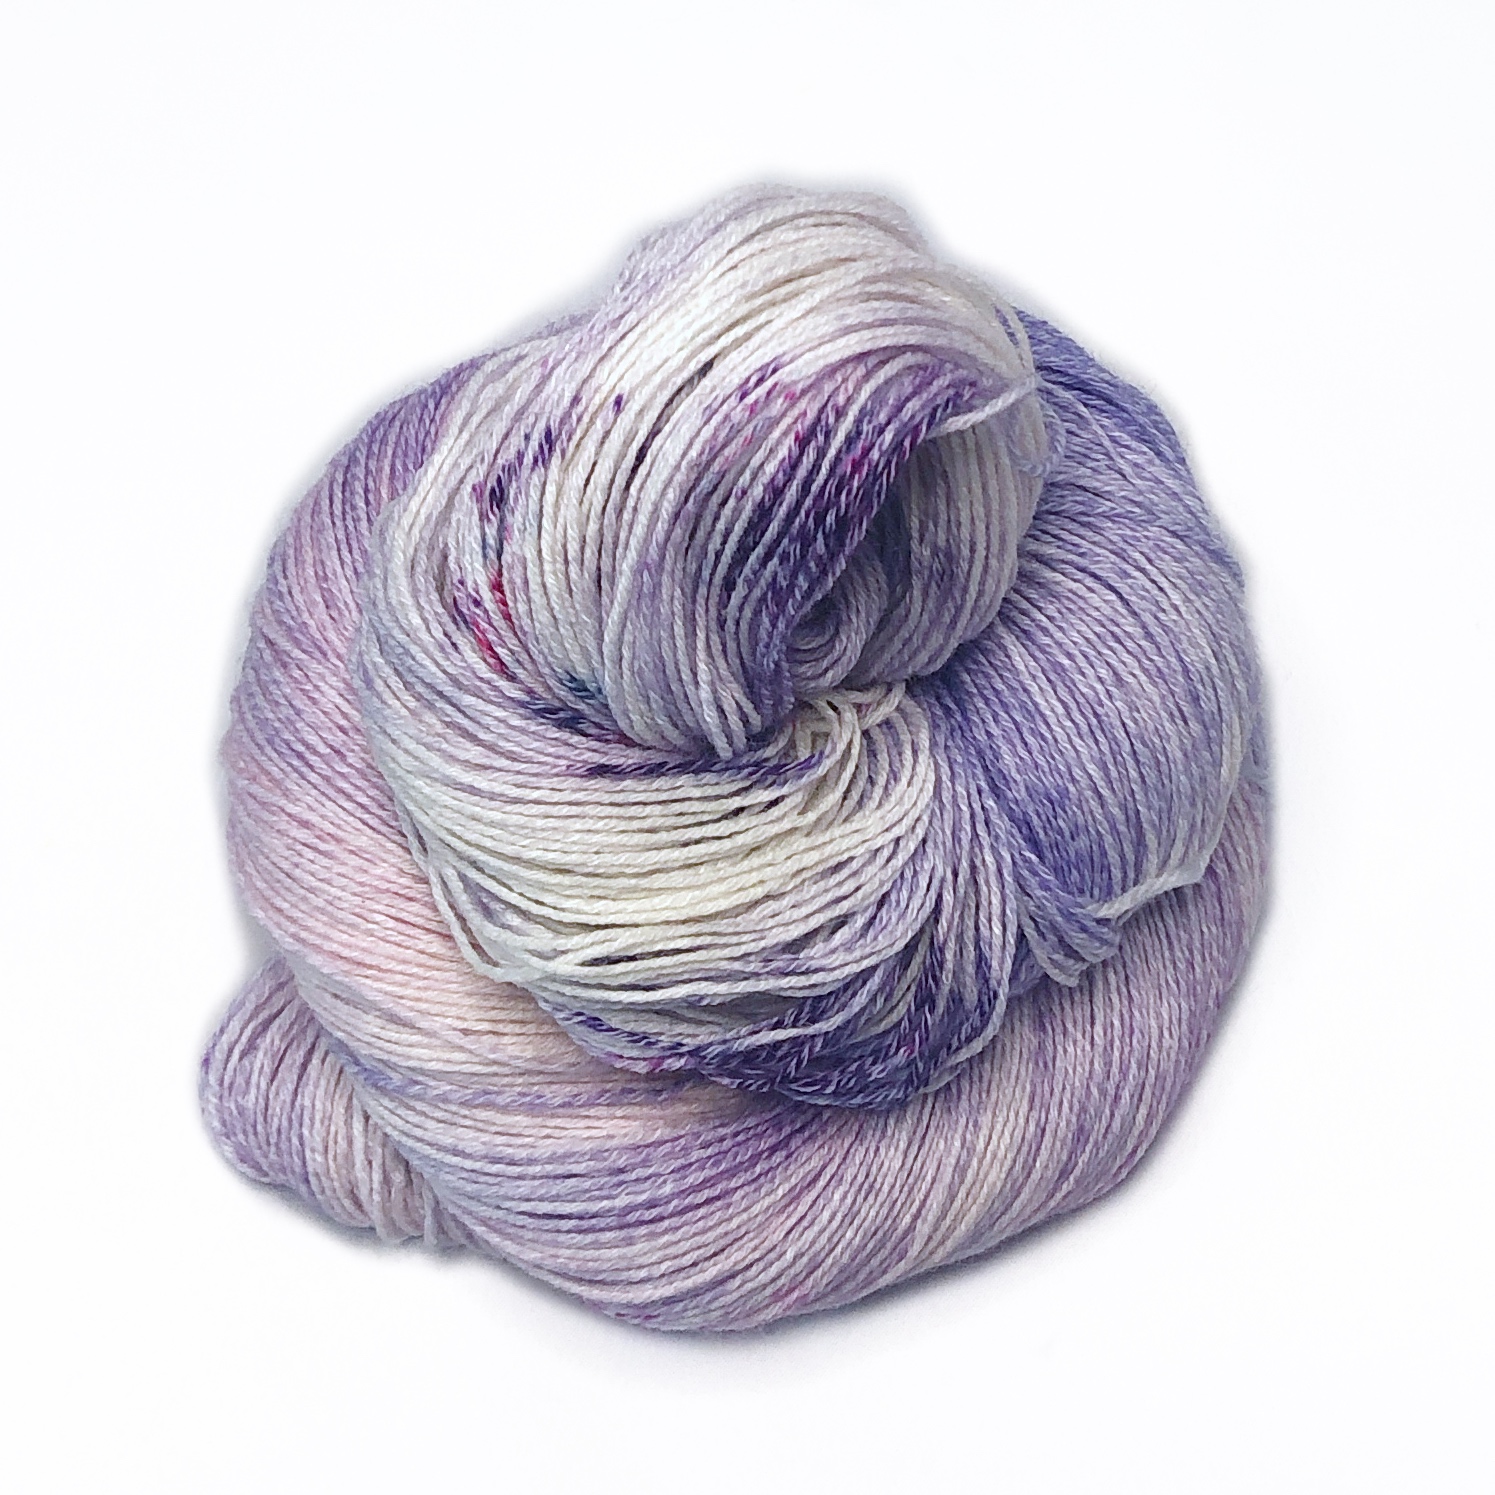 Merino/Cotton sock yarn